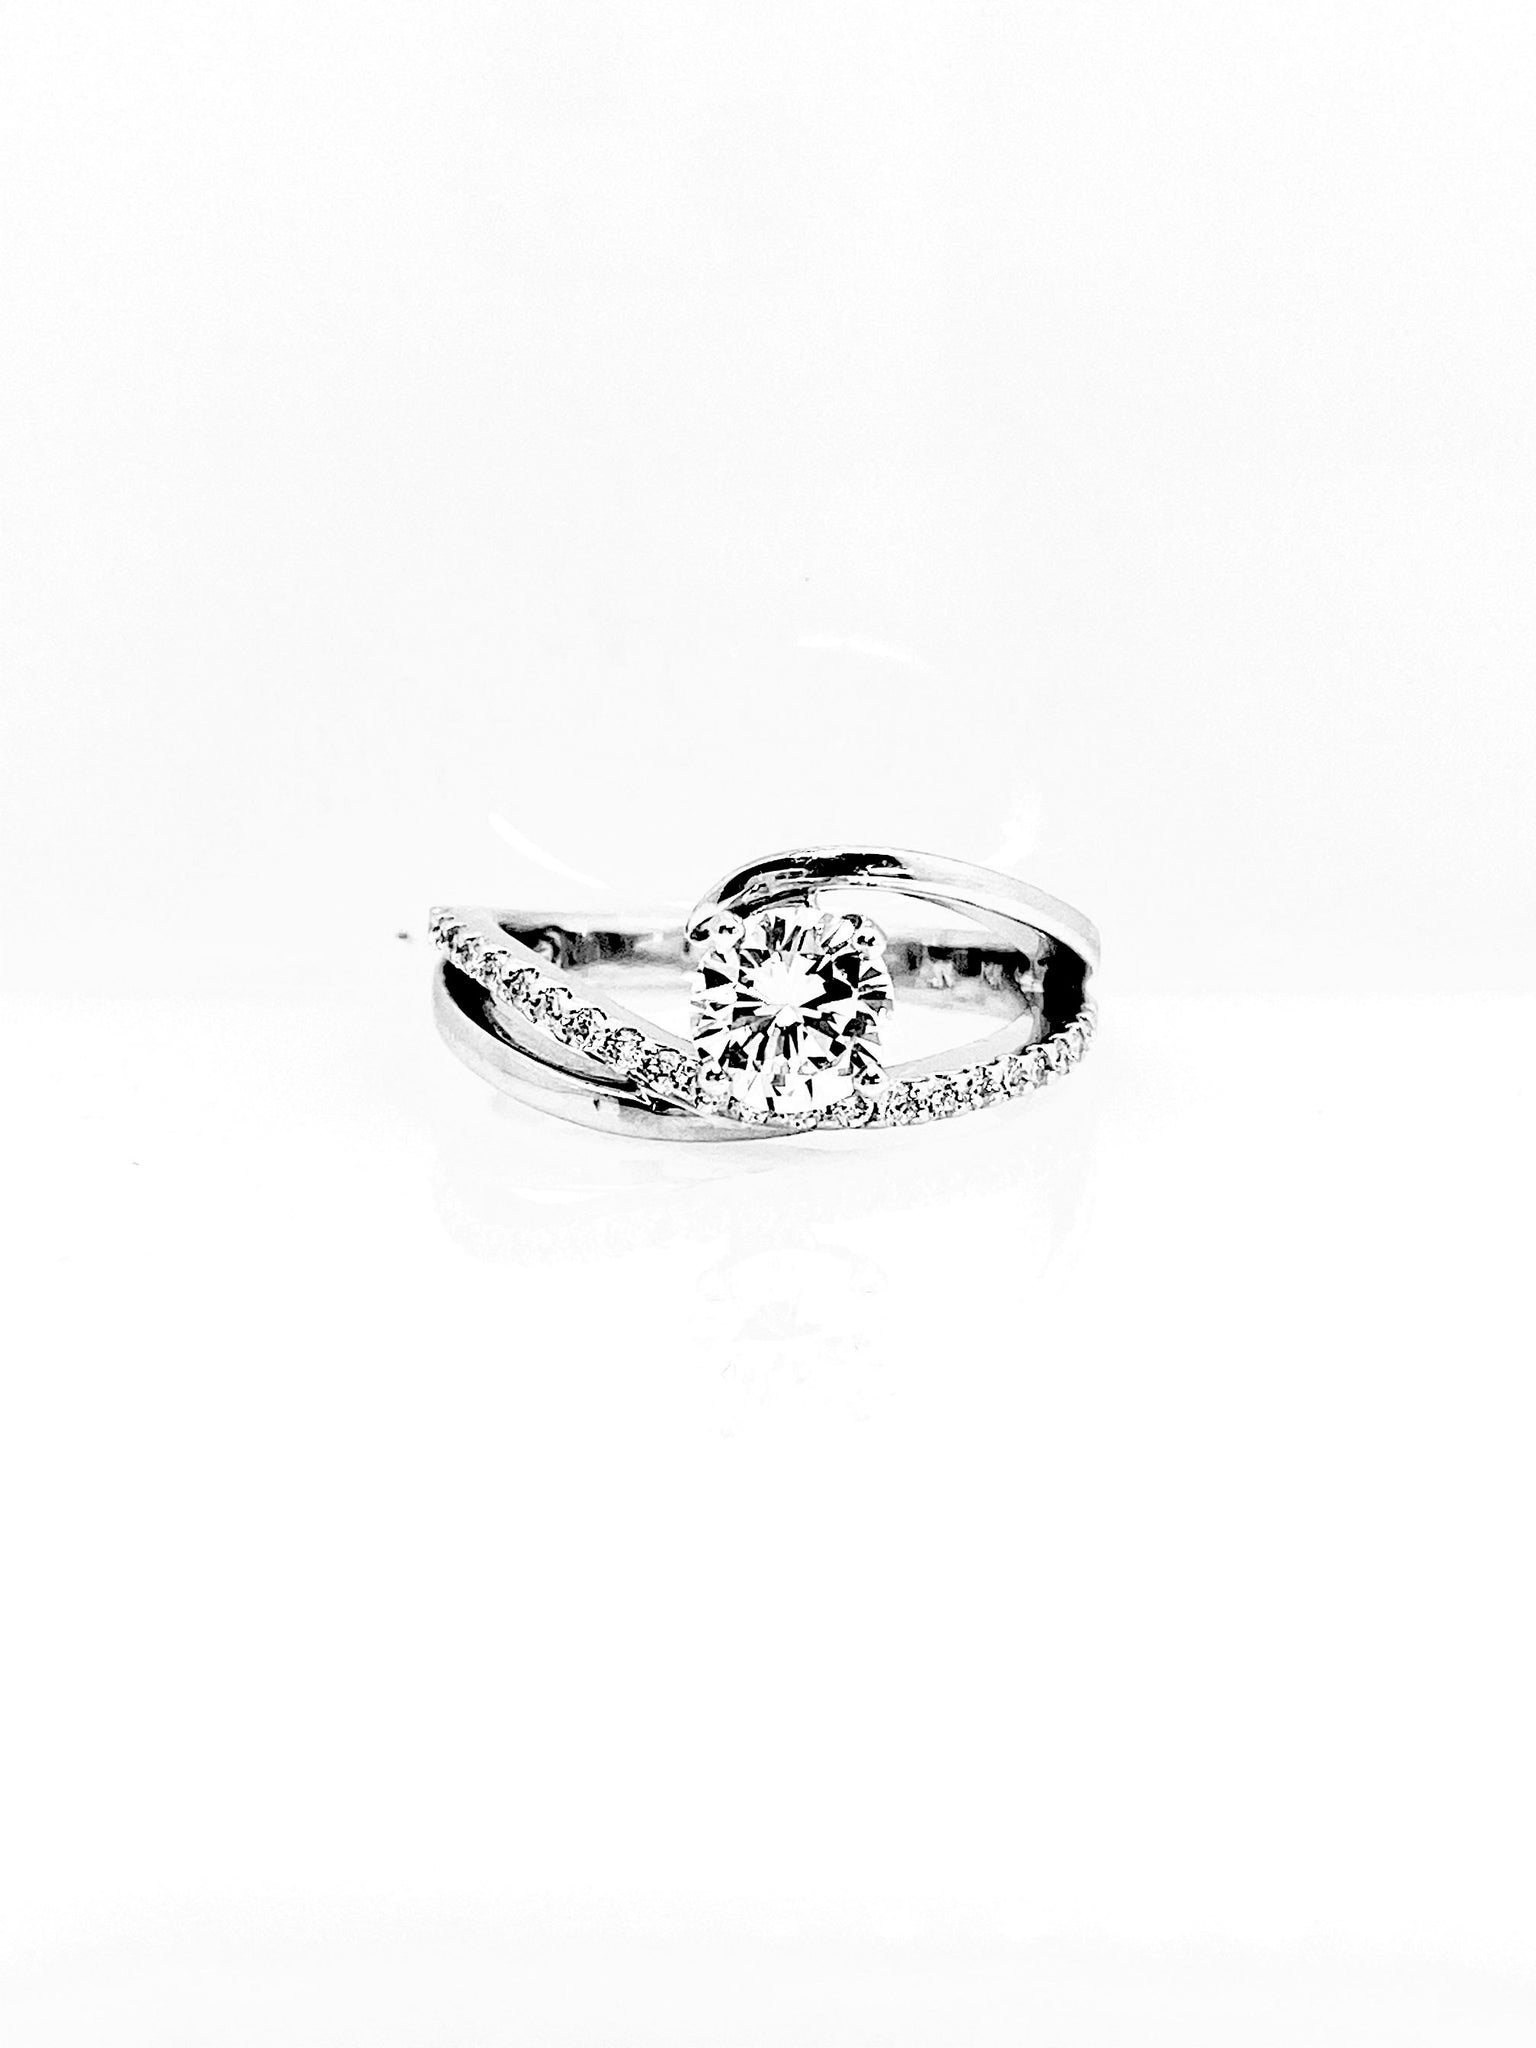 1 Carat VS1 Diamond Engagement Ring